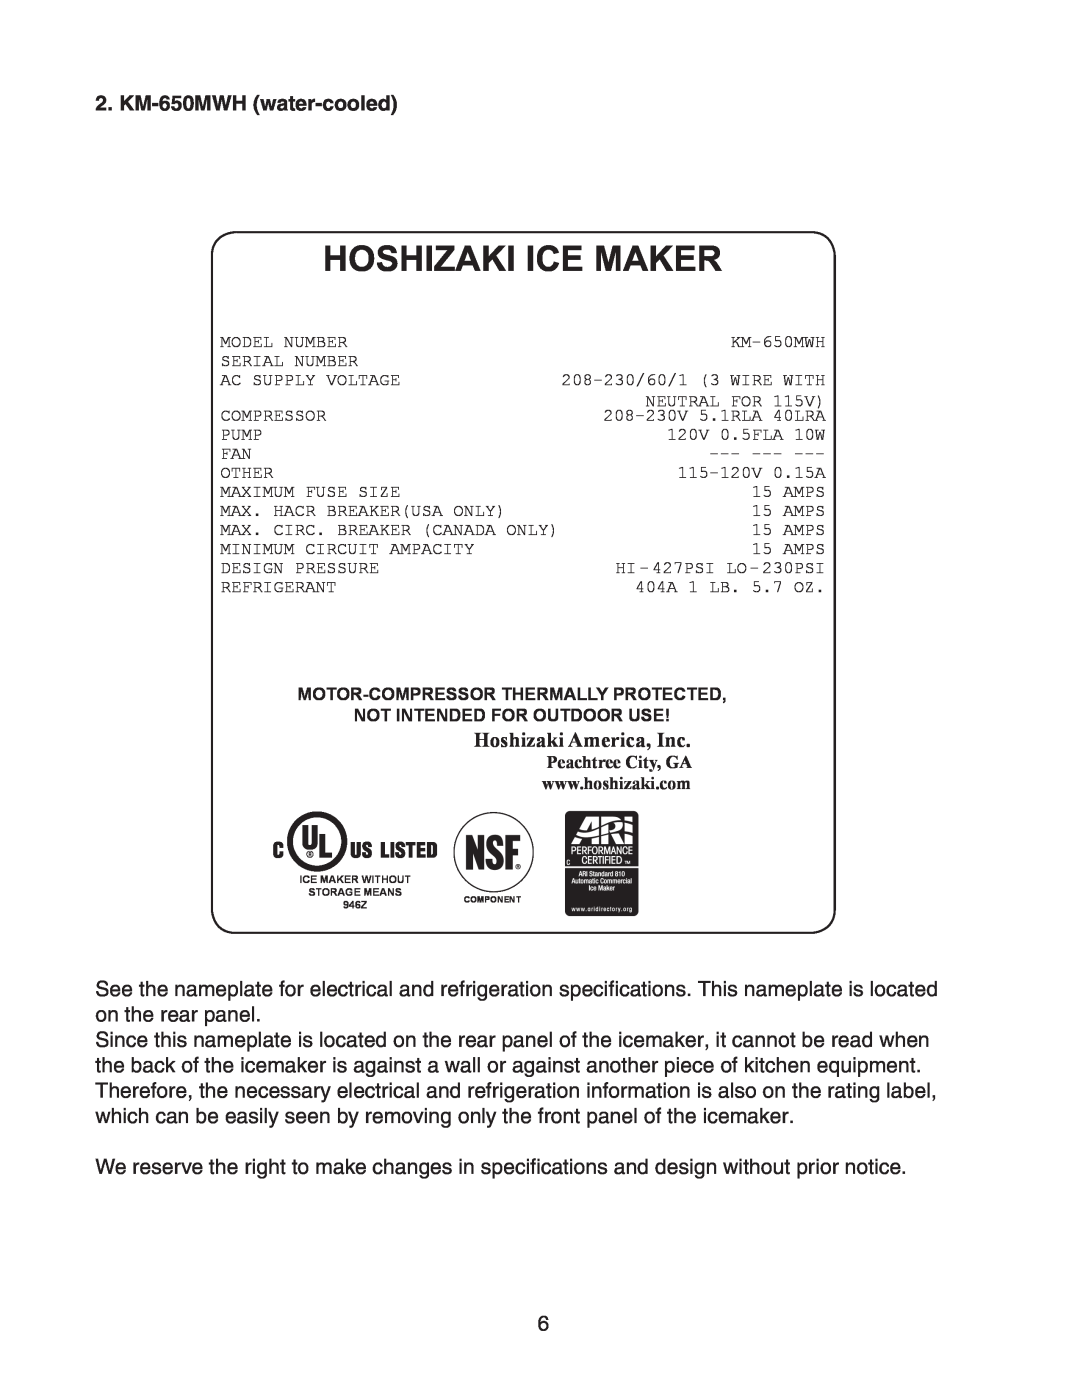 Hoshizaki KM-650MAH instruction manual KM-650MWH water-cooled, Hoshizaki Ice Maker, Hoshizaki America, Inc 